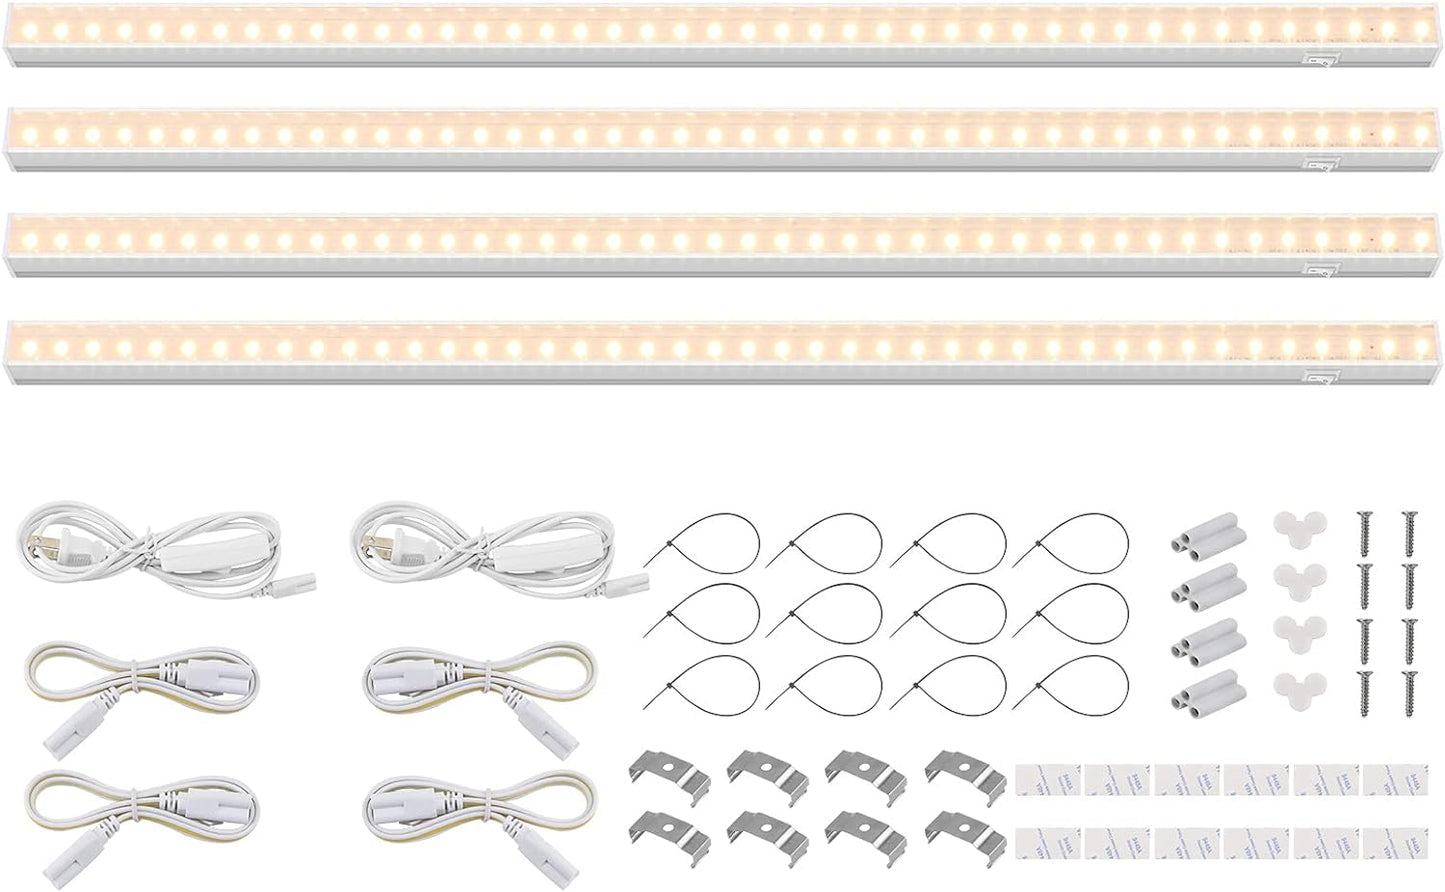 LED Strip Lights 2' (4pc) T5  - 10W each (40w total), 3000K Full Spectrum